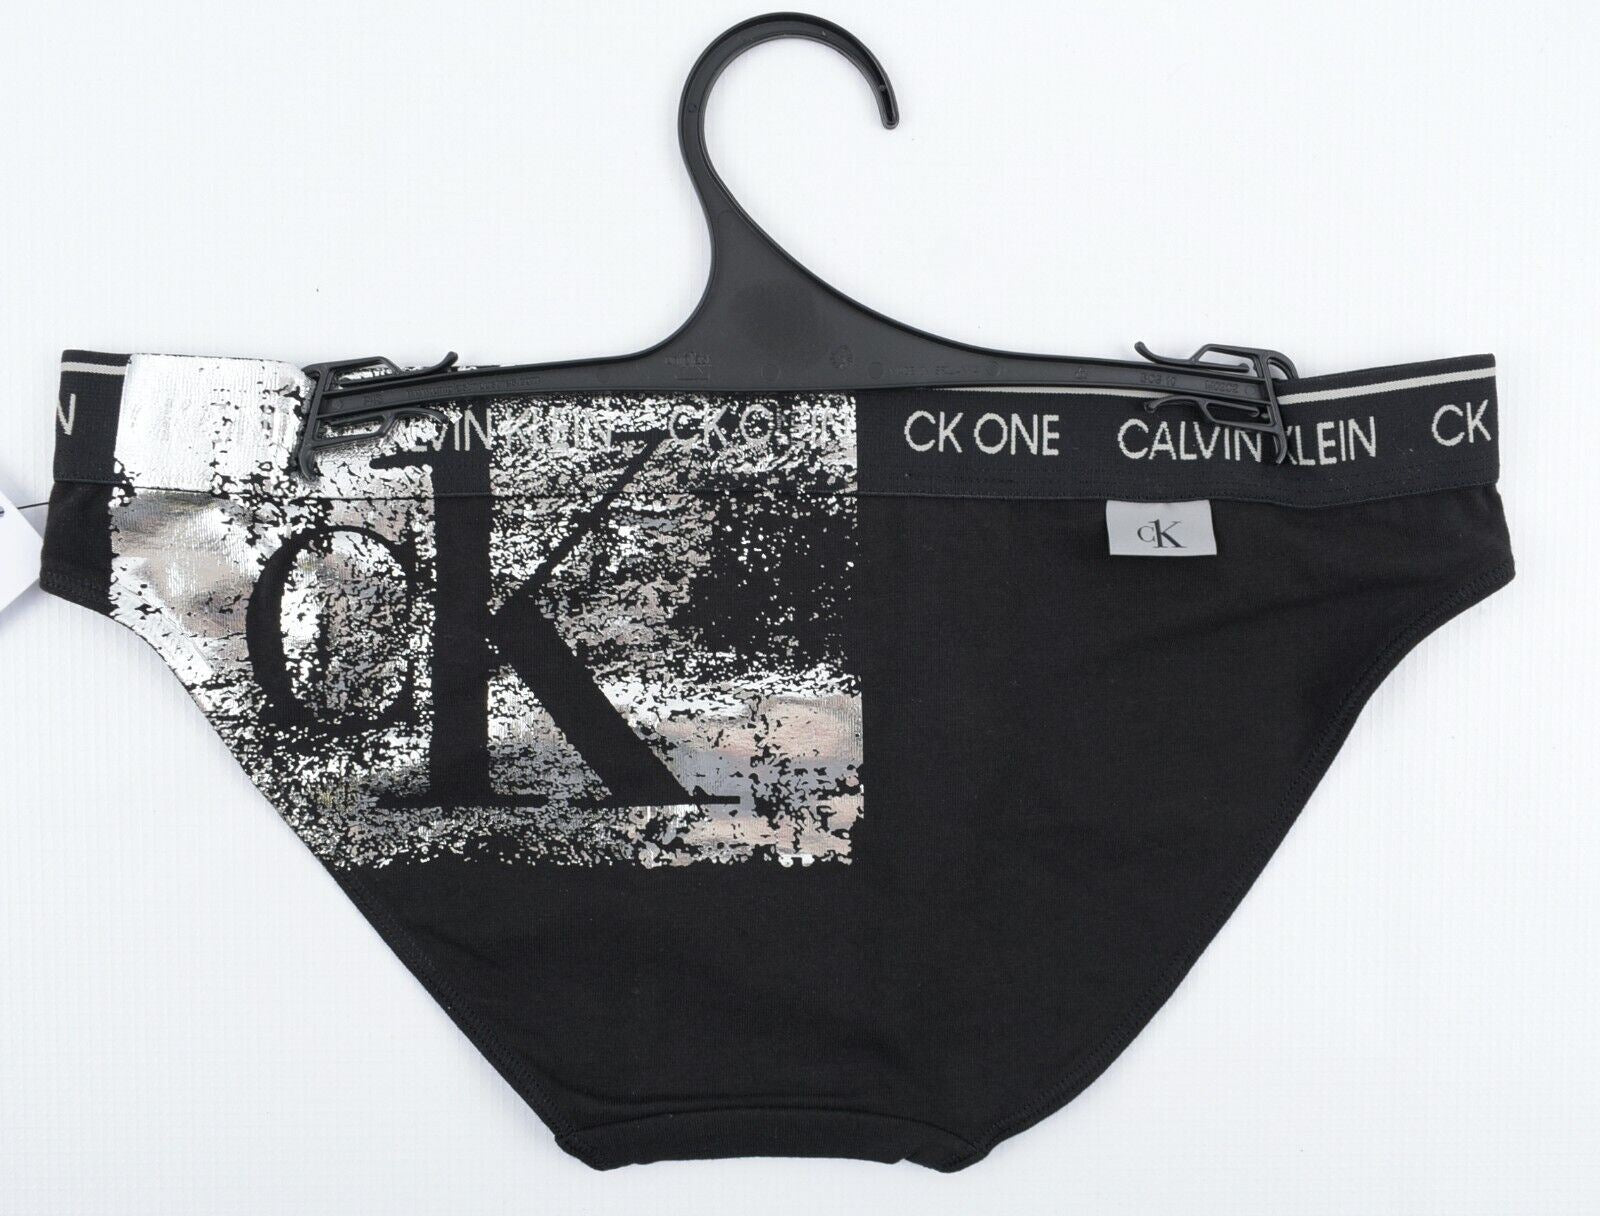 CALVIN KLEIN Underwear: CK ONE Women's Foil Bikini Briefs, Black, size S (UK 10)